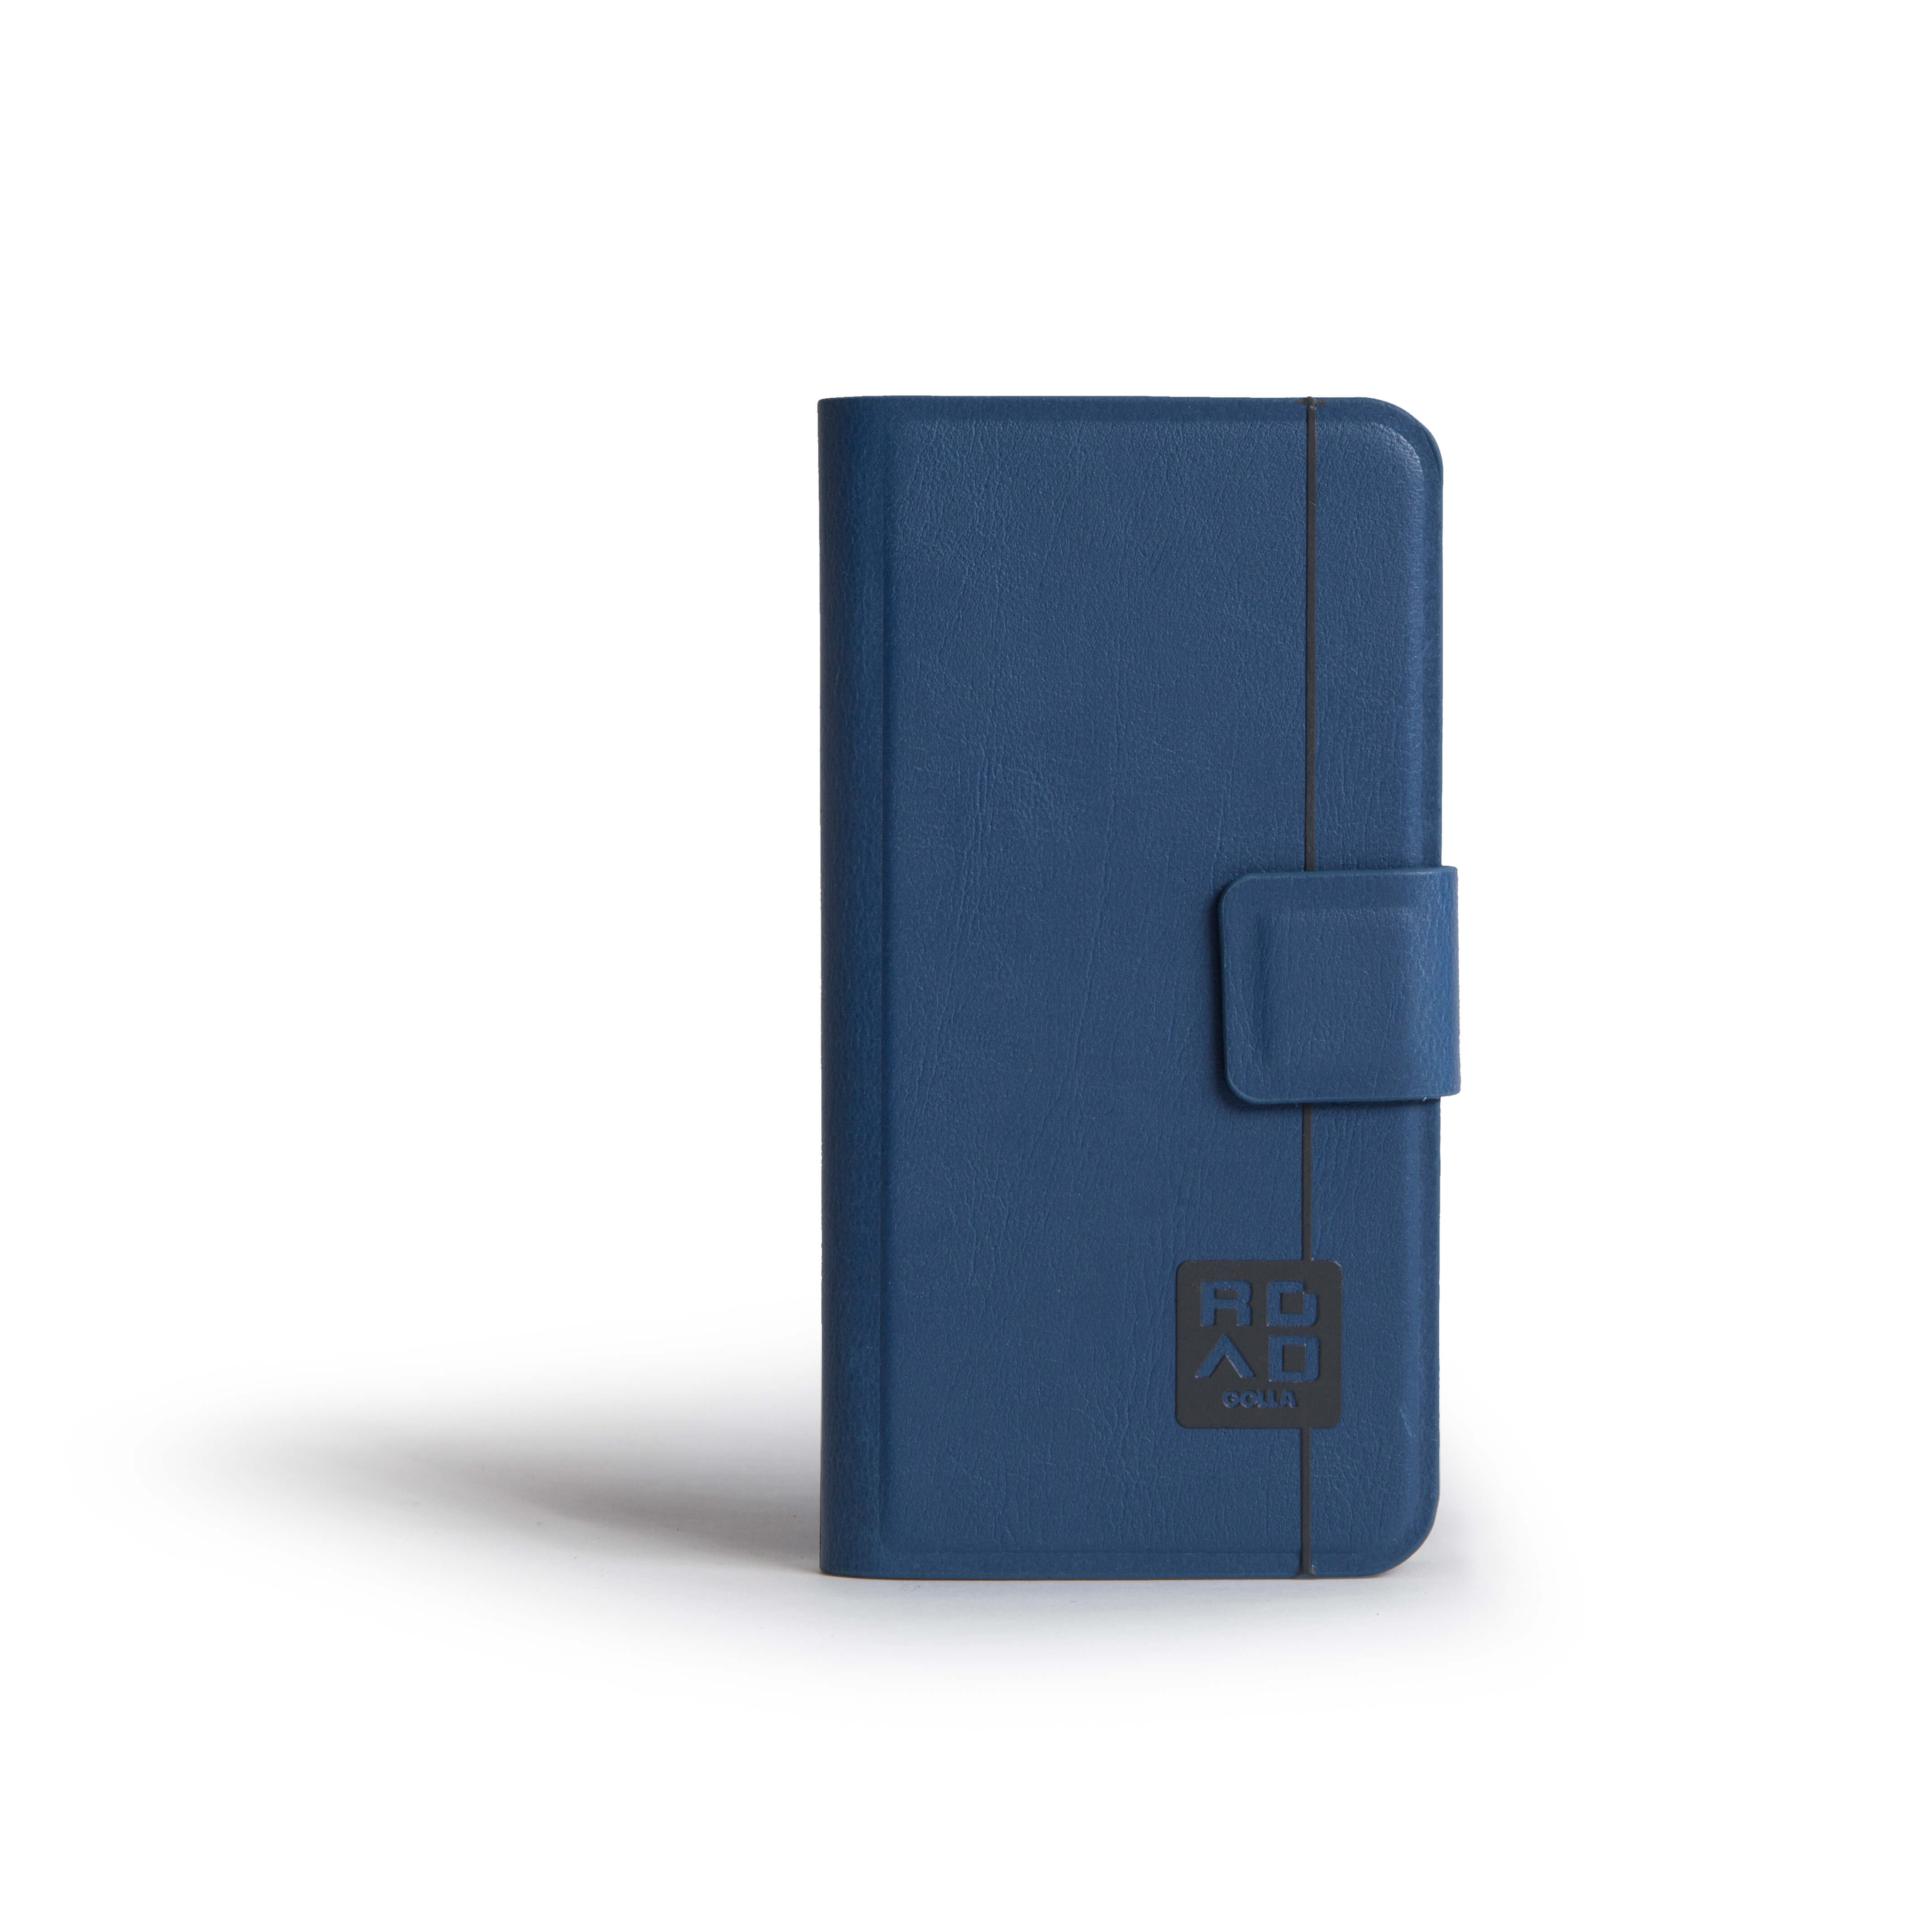 Smartphone Booklet Andie for Apple iPhone 5S, Blue/Dark Gre